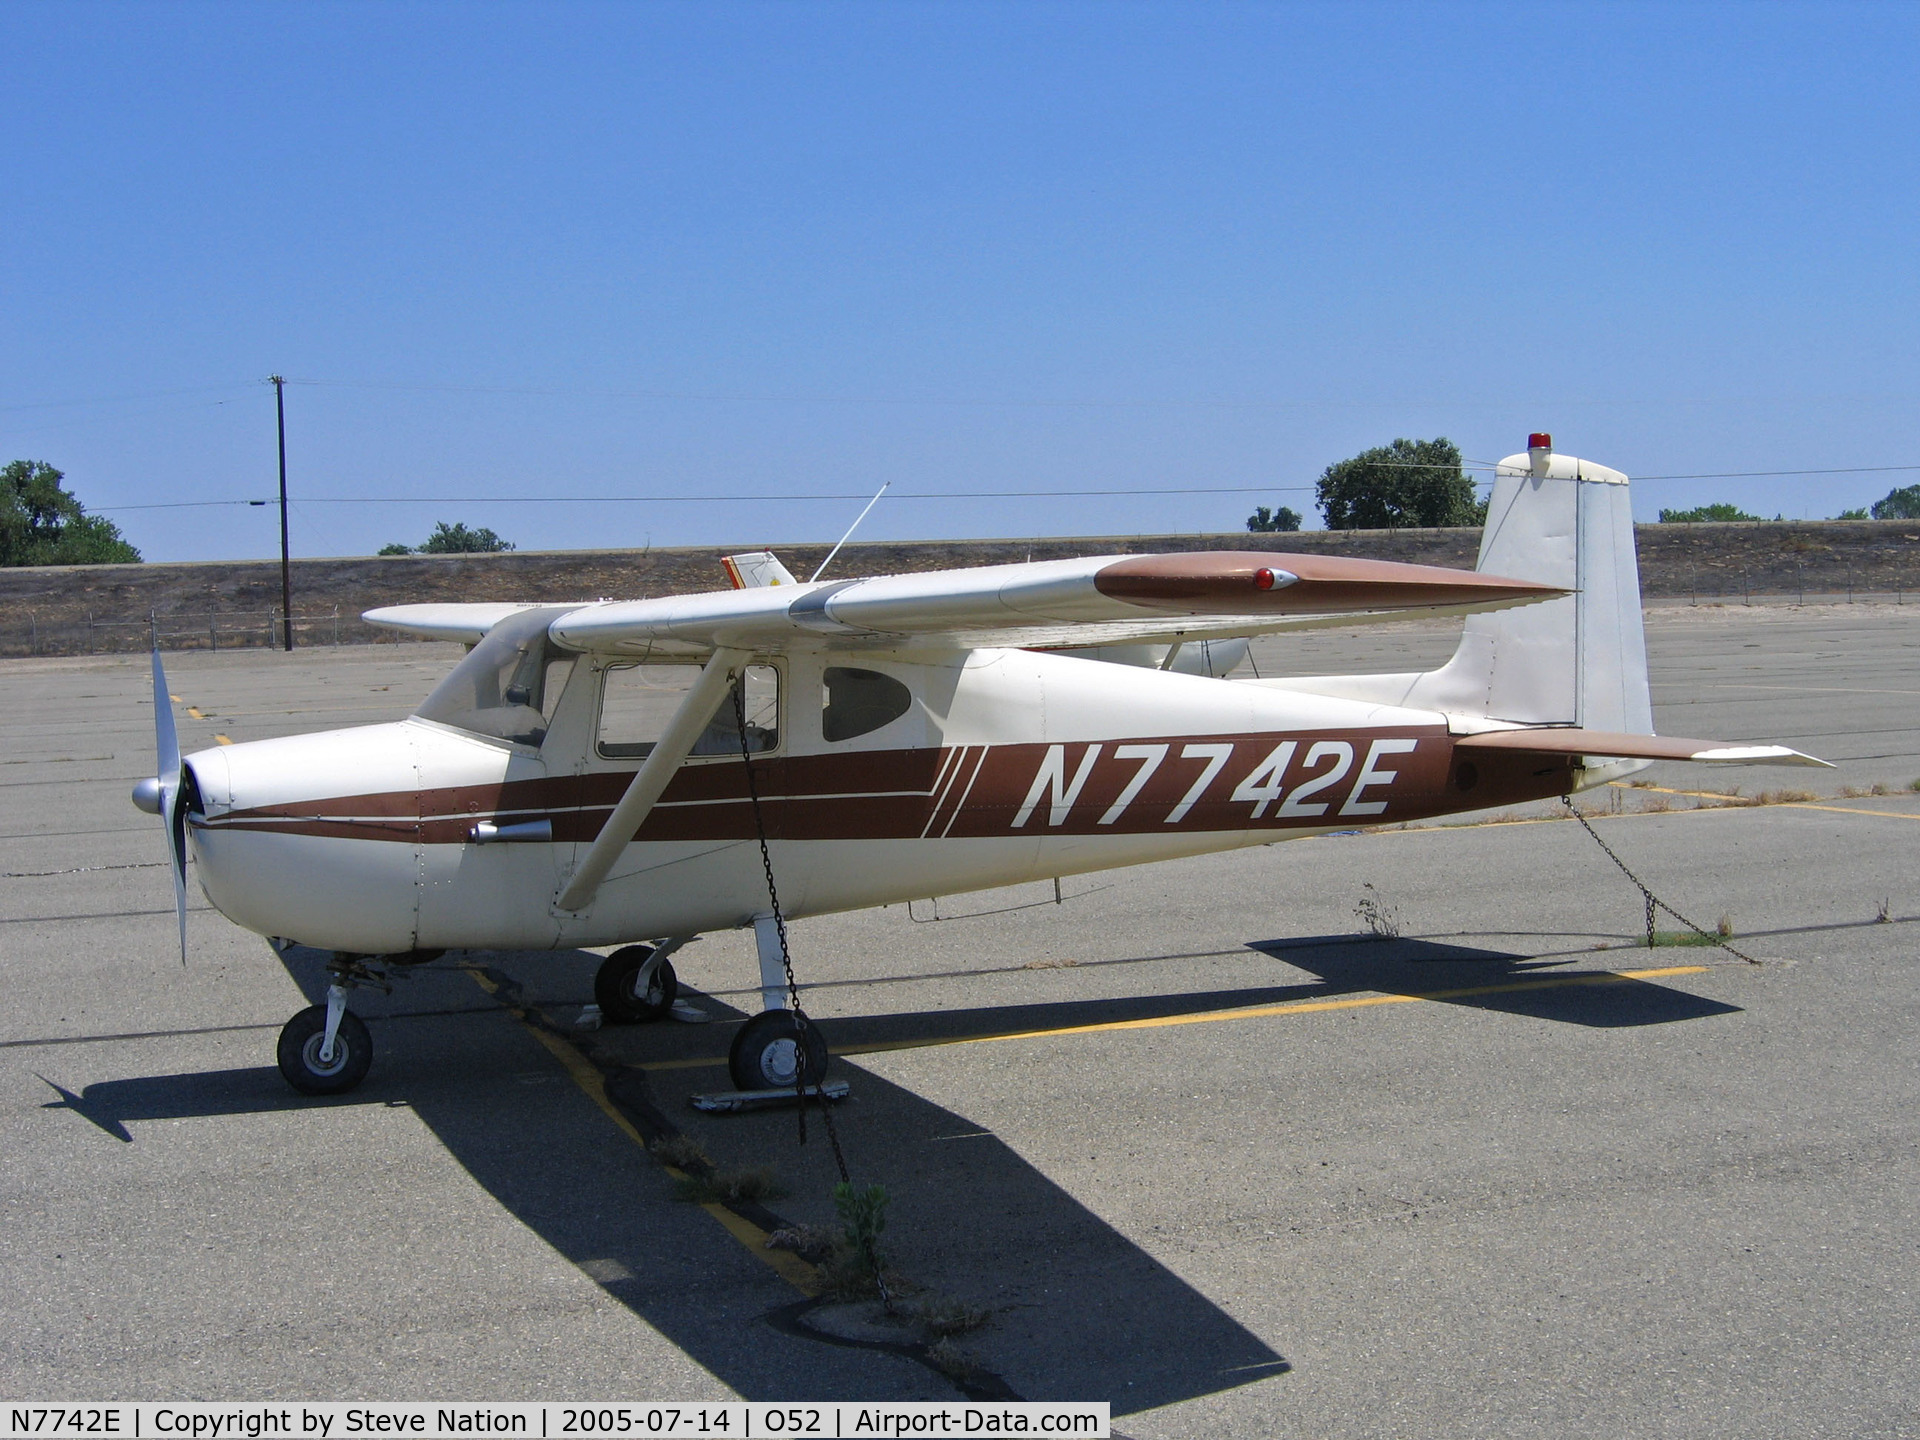 N7742E, 1959 Cessna 150 C/N 17542, 1959 straight-tail Cessa 150 at Yuba City, CA